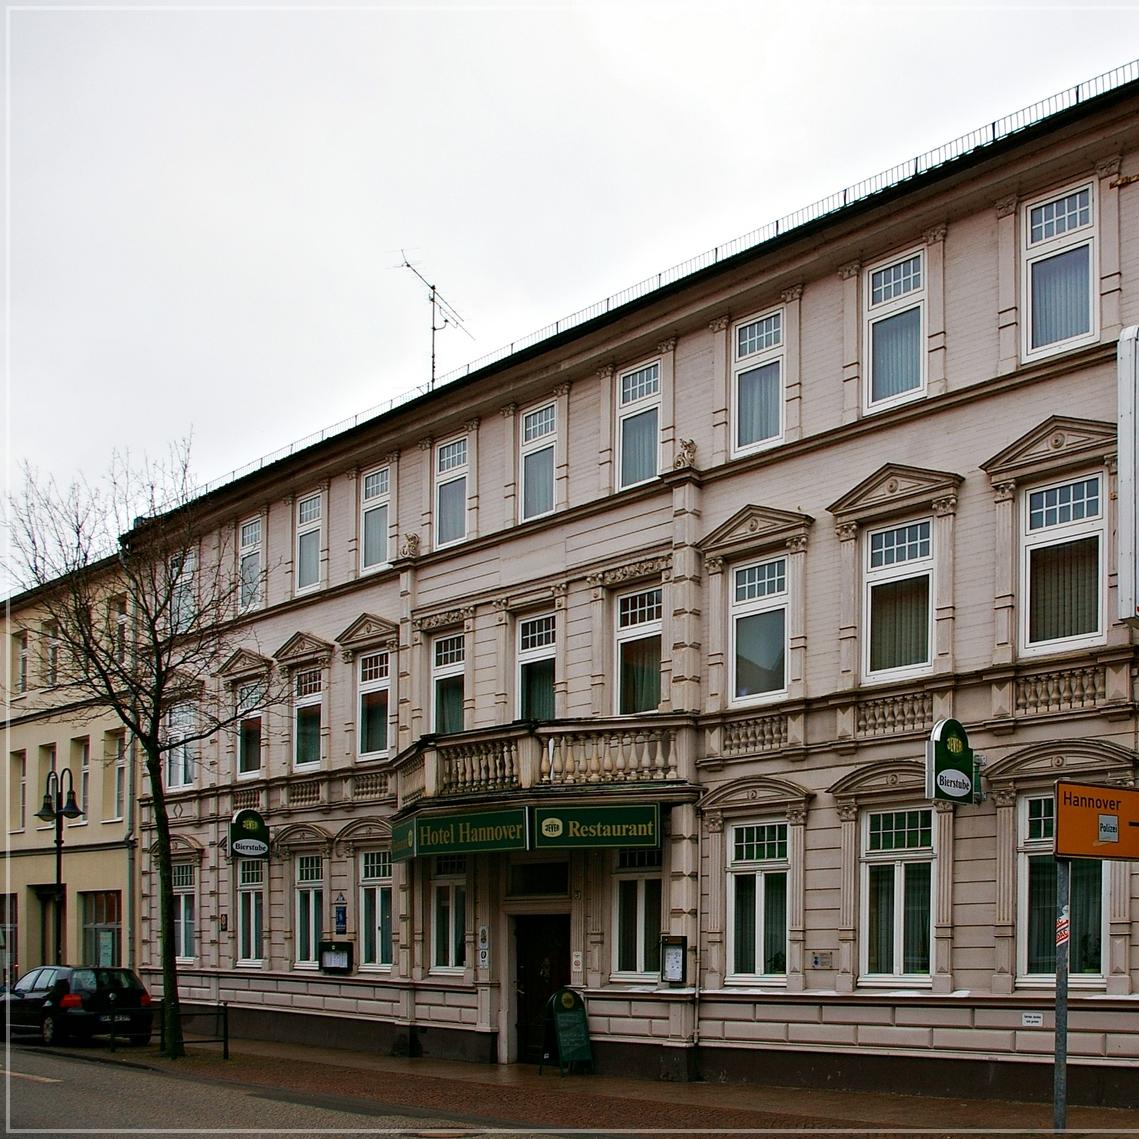 Restaurant "Hotel Hannover" in Walsrode